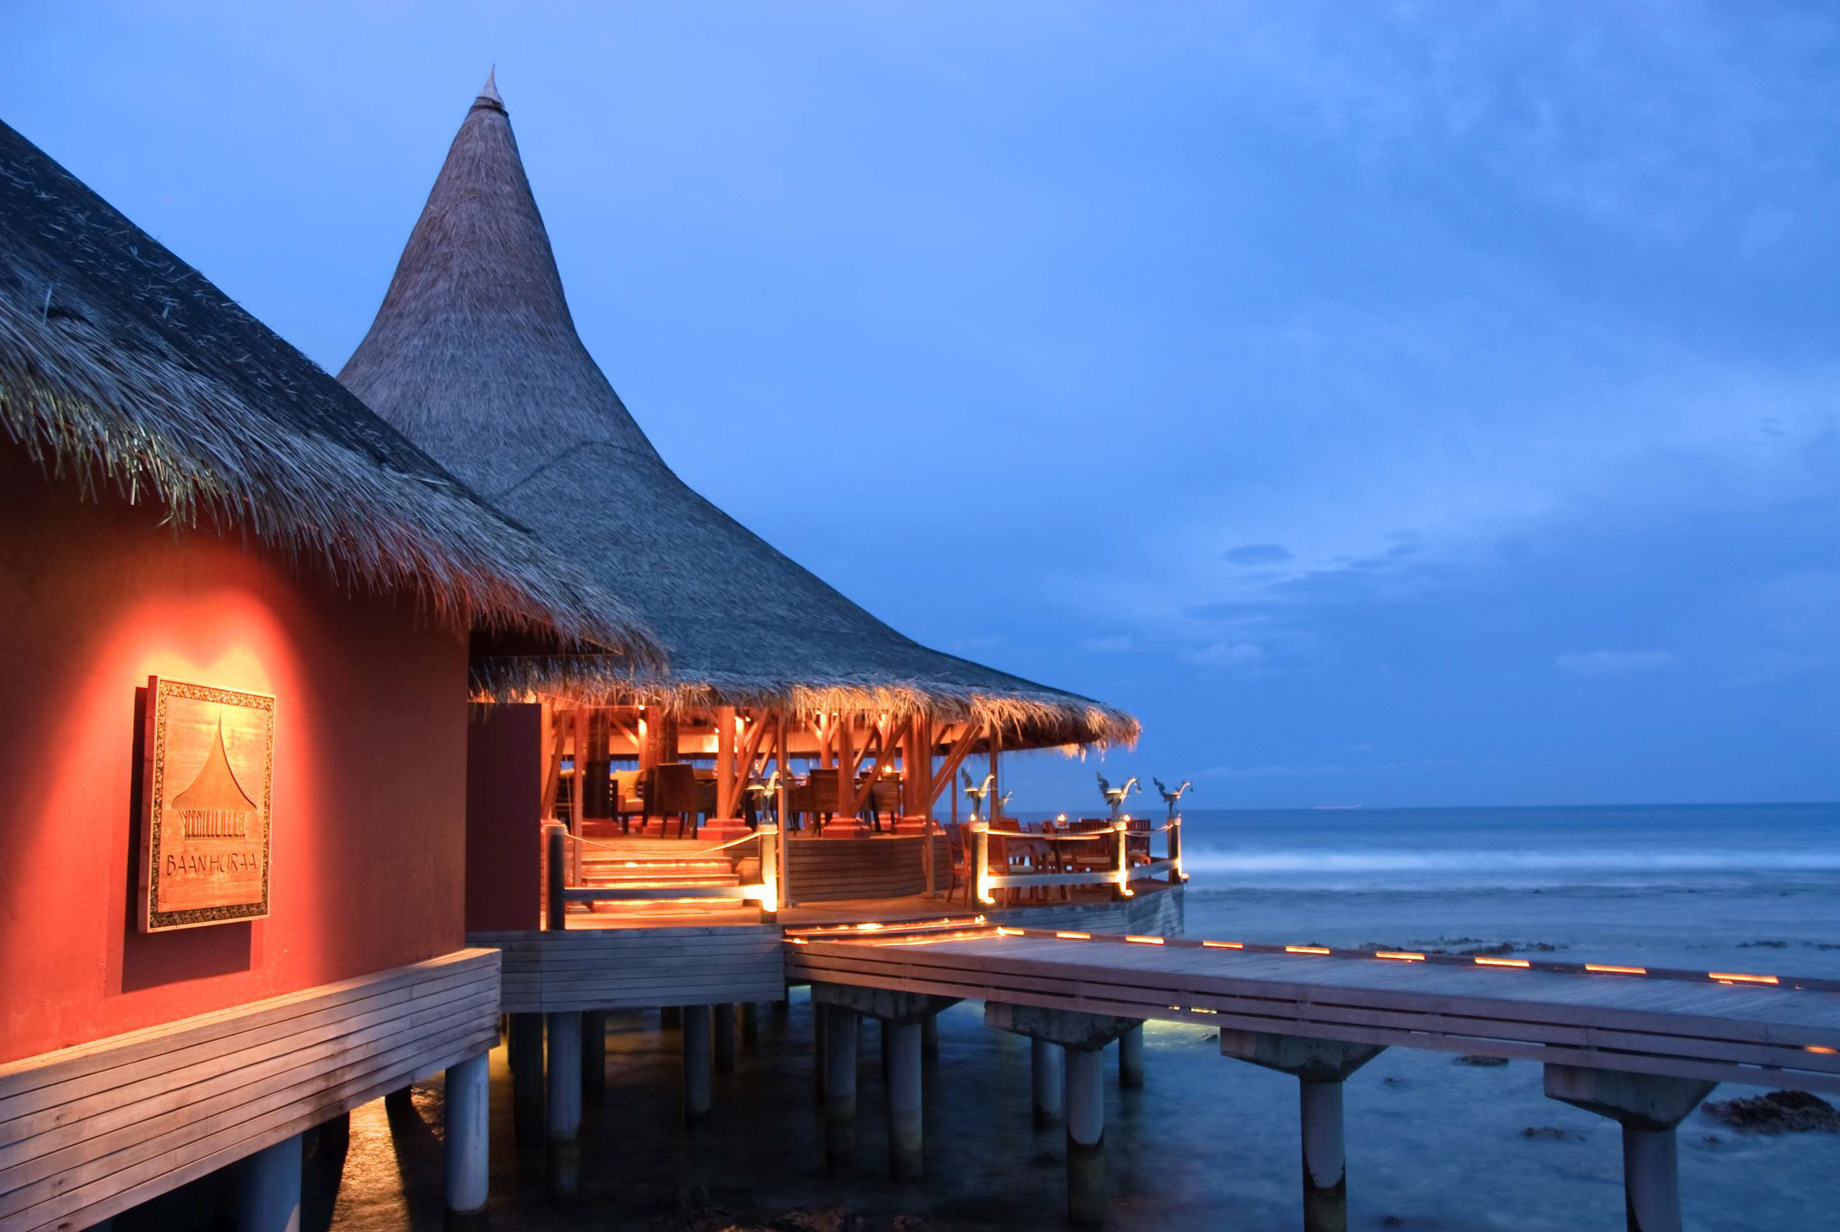 Anantara Veli Maldives Resort – South Male Atoll, Maldives – Baan Huraa Restaurant